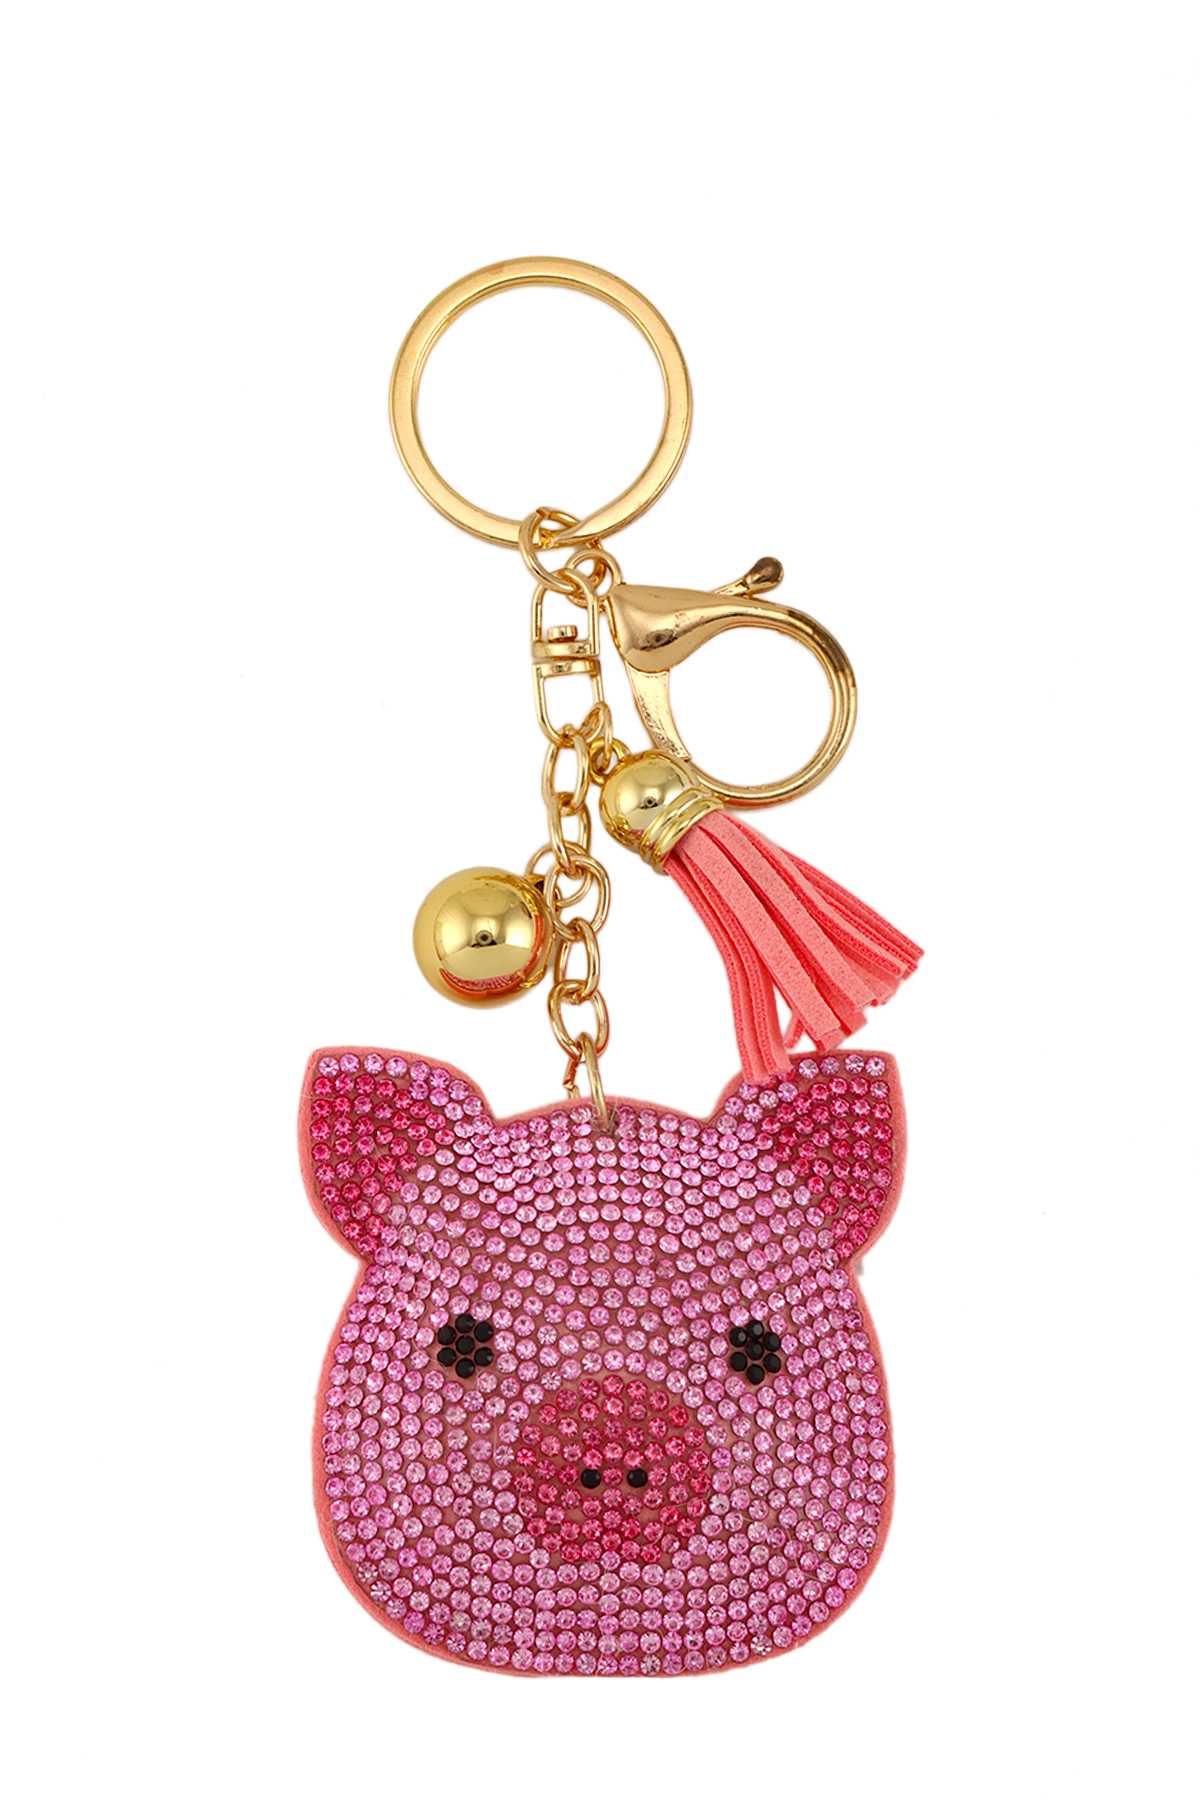 Rhinestone Pig Key Chain